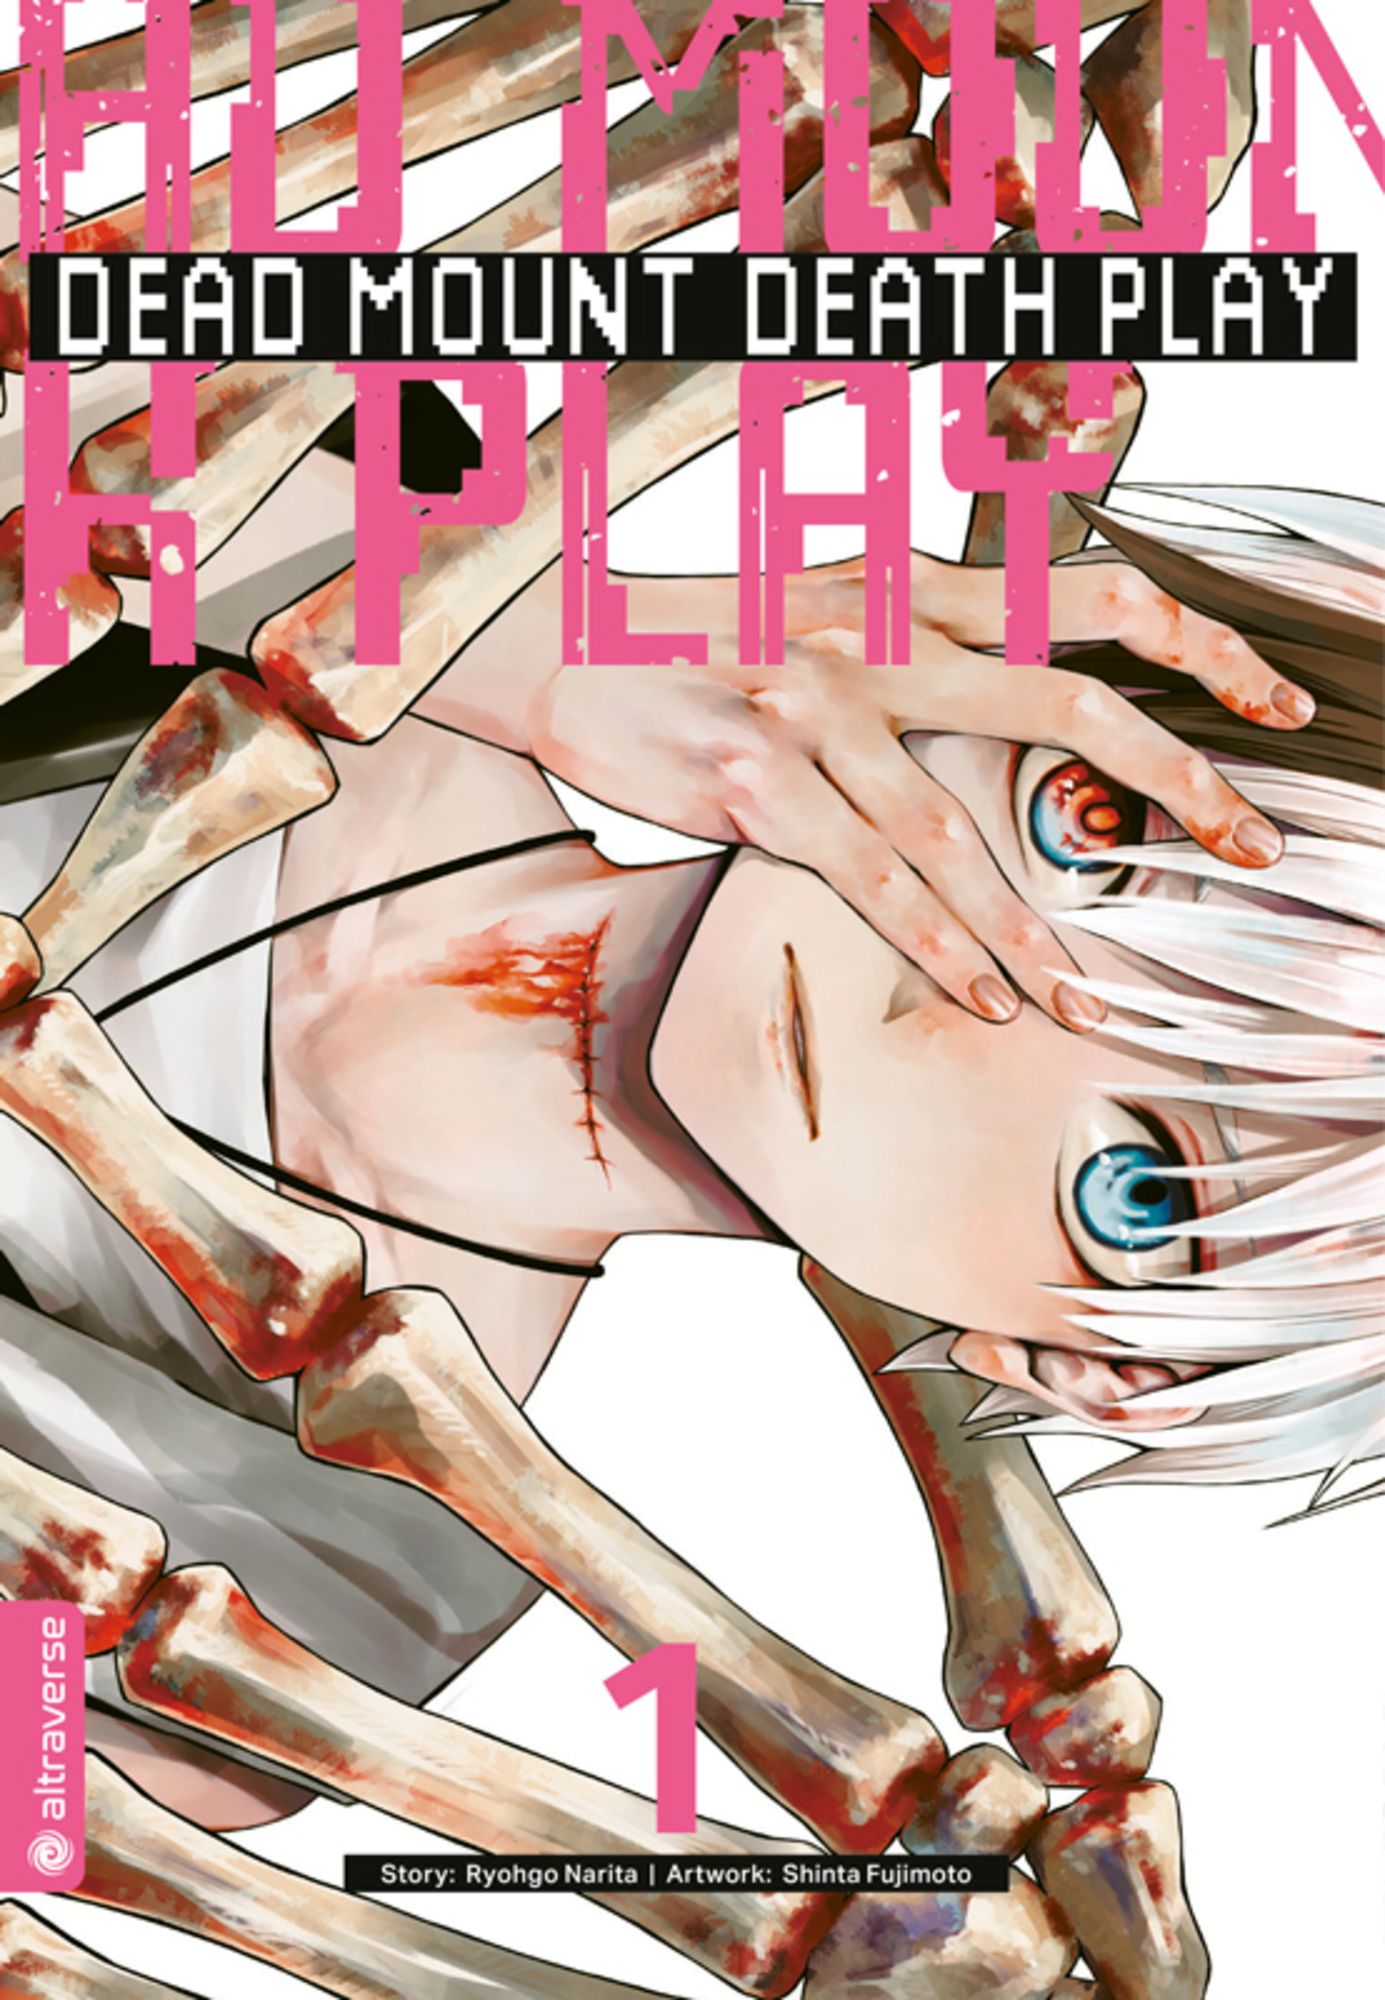 26+ Read Dead Mount Death Play Manga